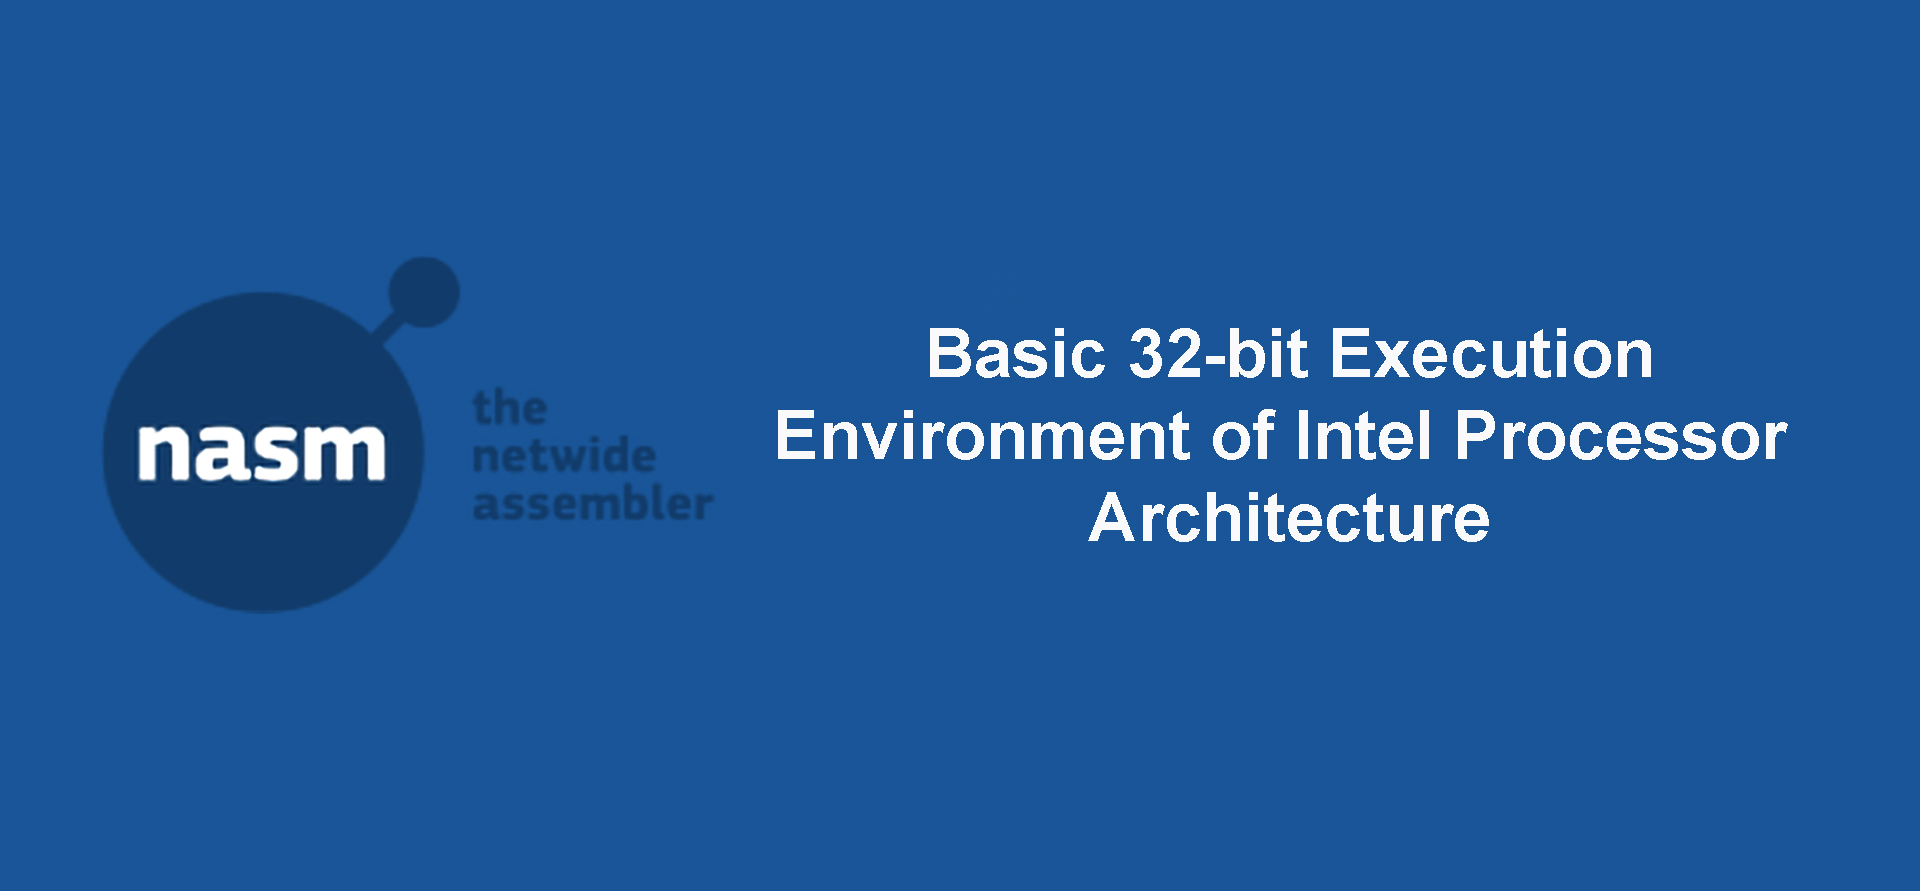 Basic Execution Environment of Intel Processor 32-bit Architecture